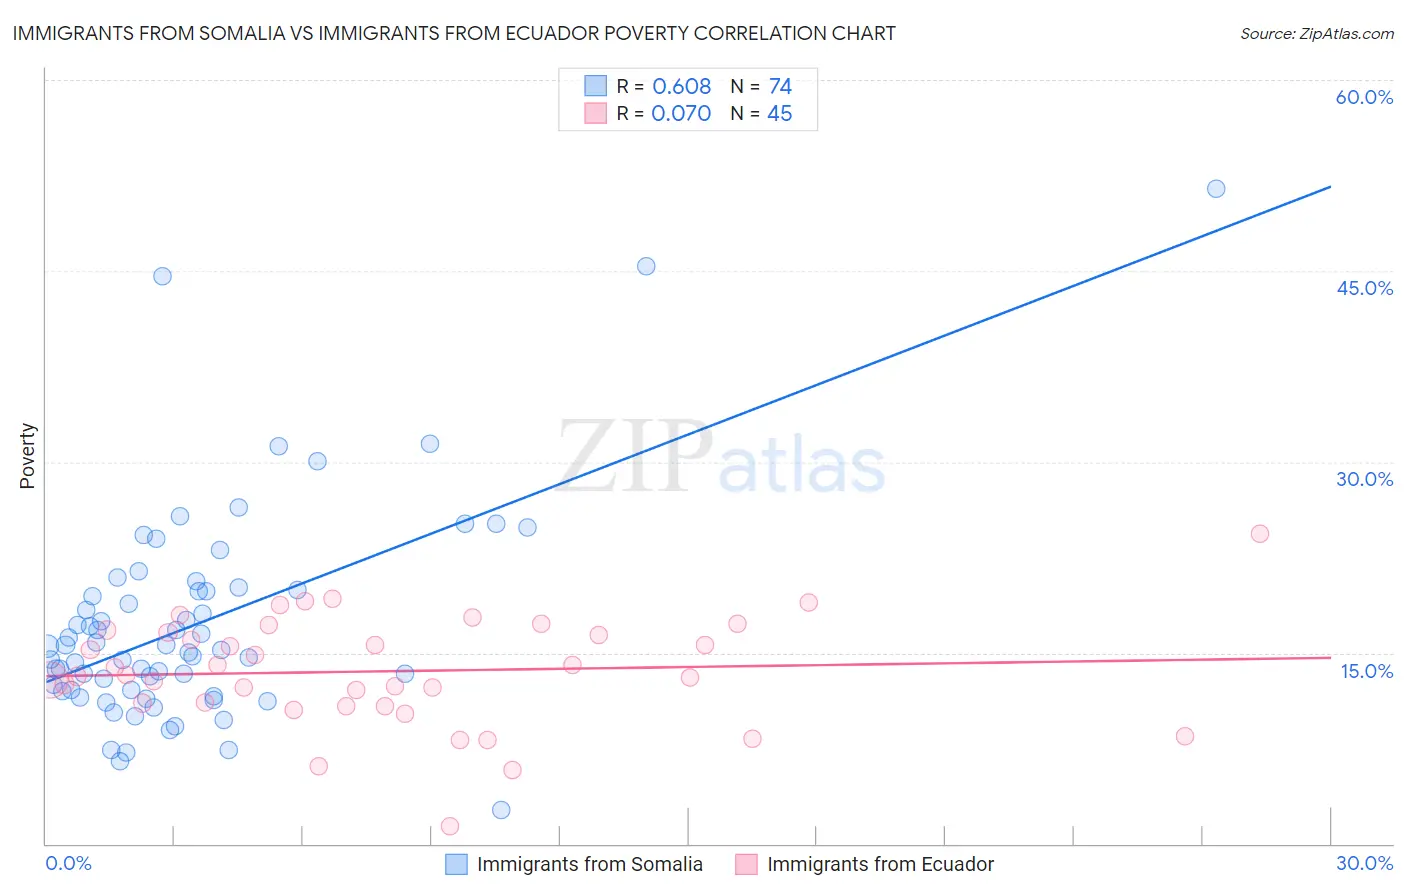 Immigrants from Somalia vs Immigrants from Ecuador Poverty